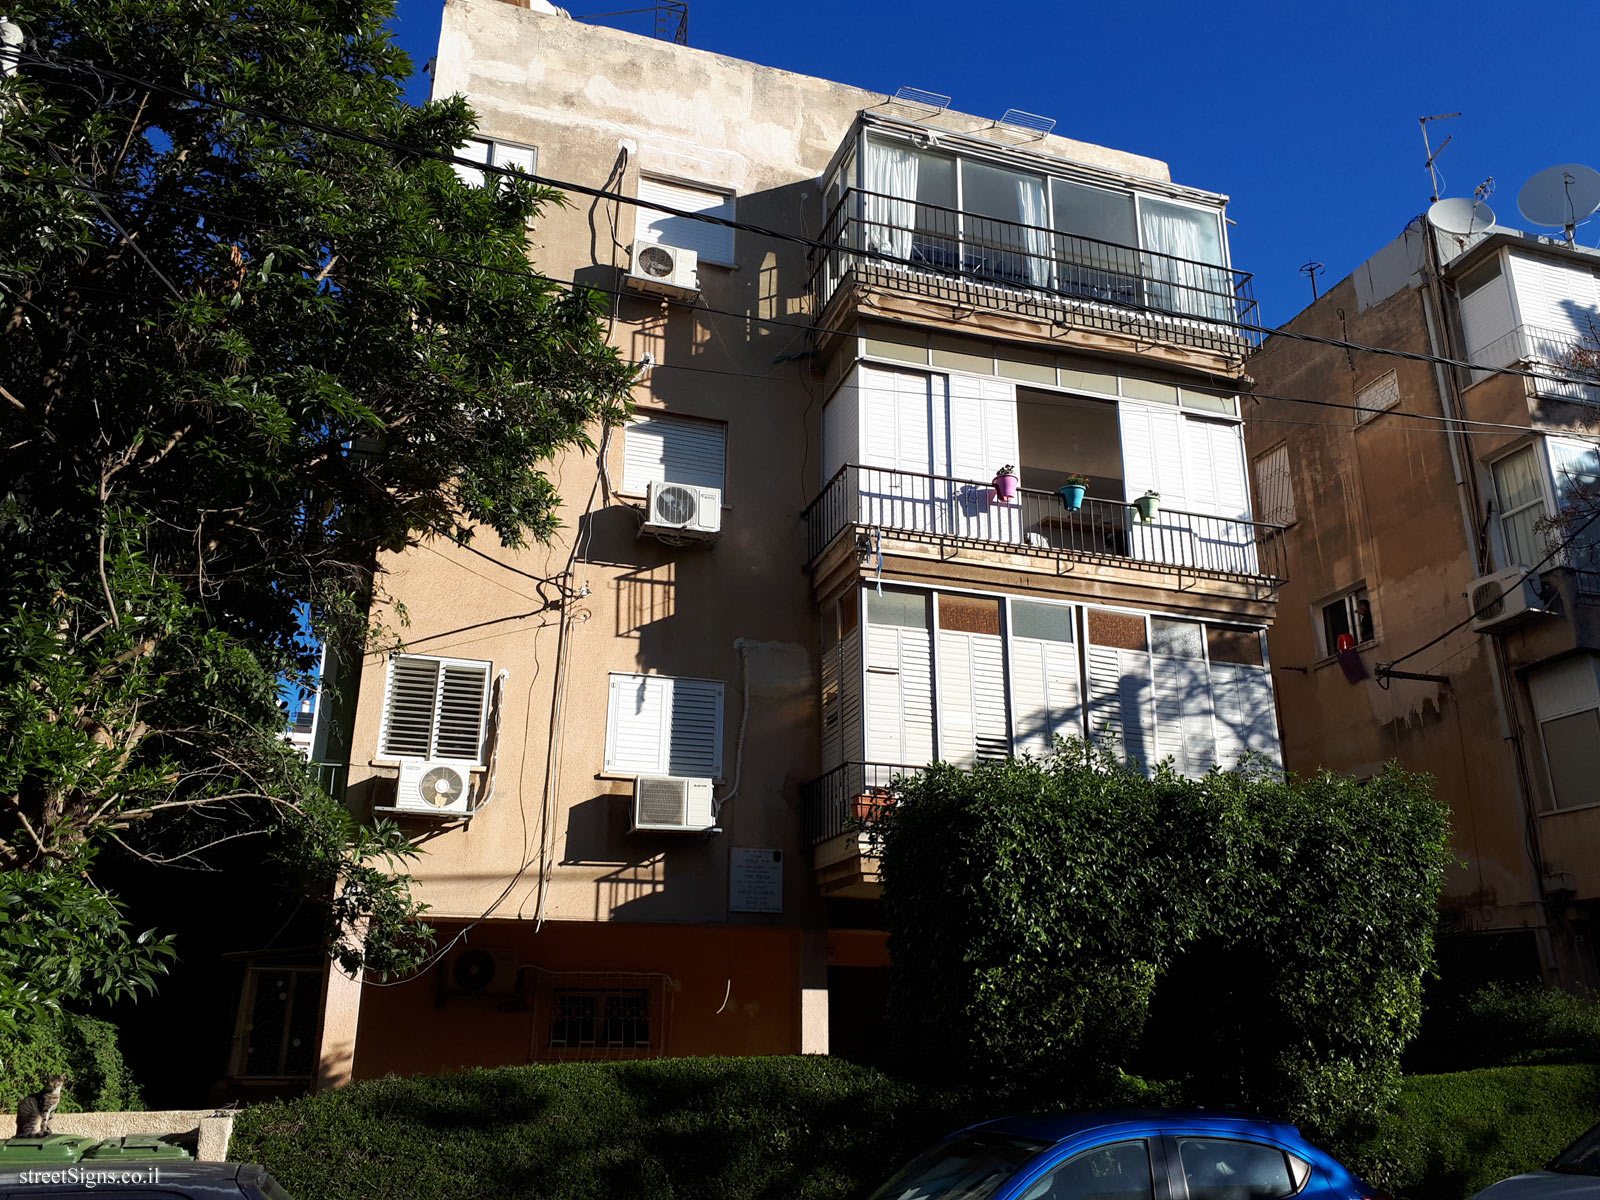 The house of David Handler & Aviva Uri - Yerikho St 3, Tel Aviv-Yafo, Israel